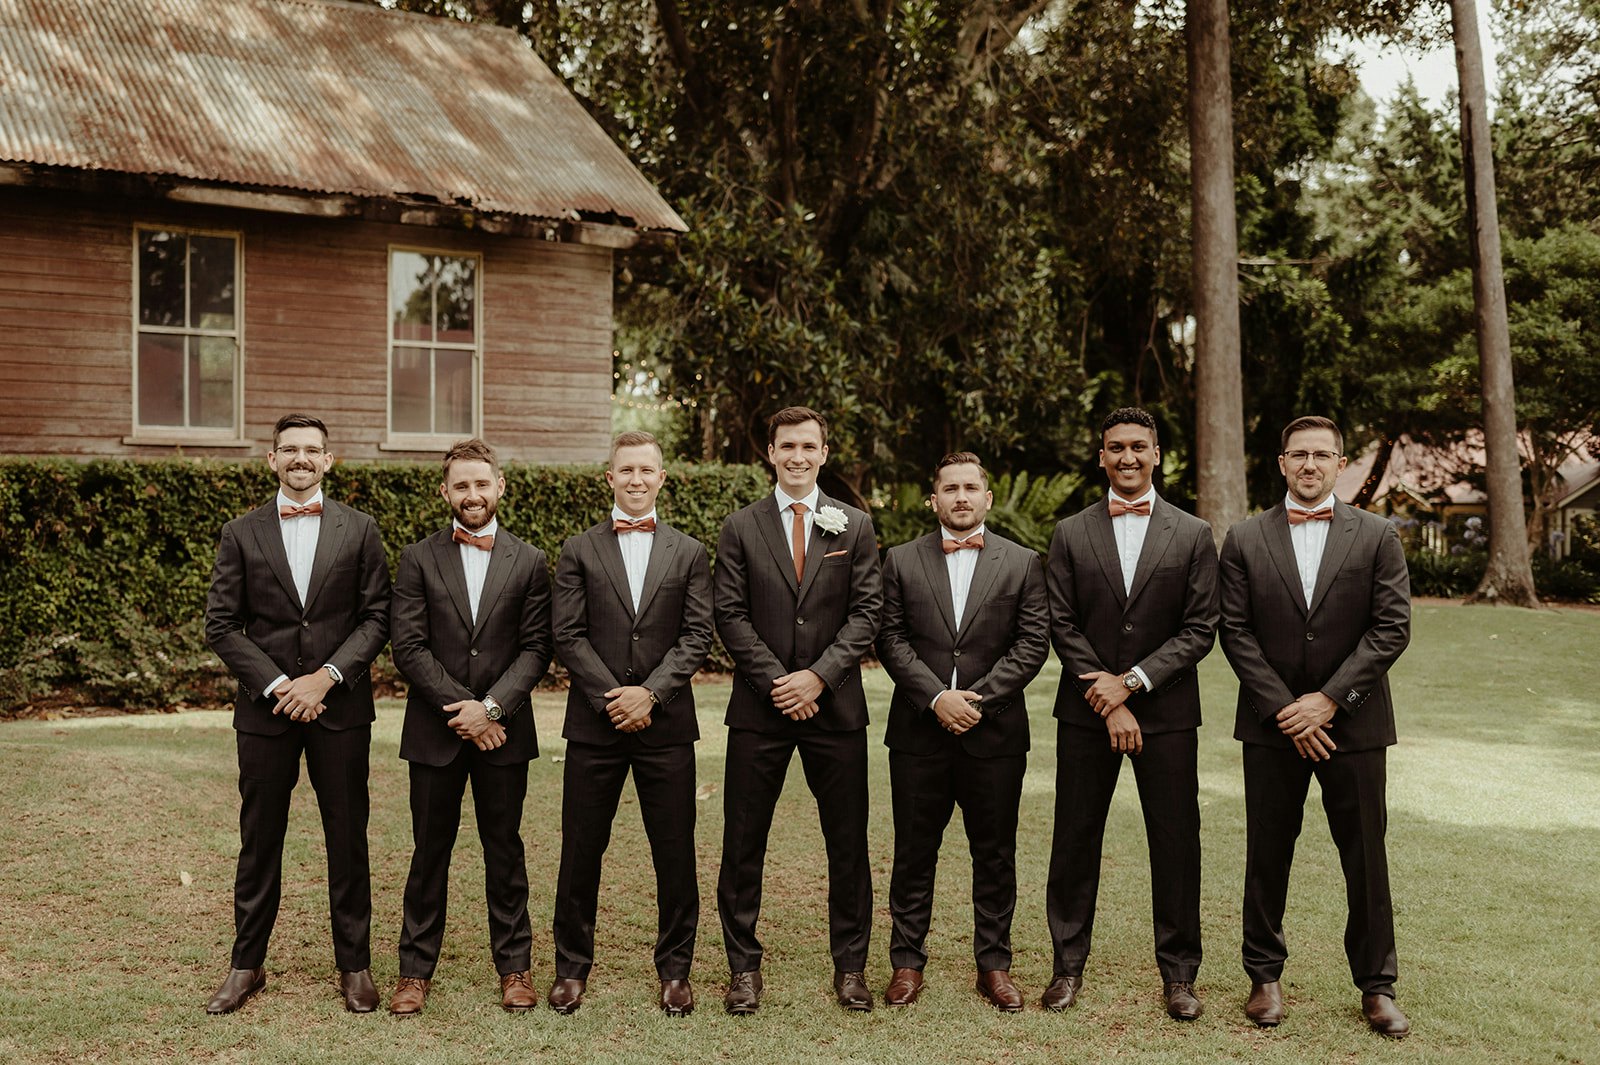 Groom and groomsmen in wedding suits